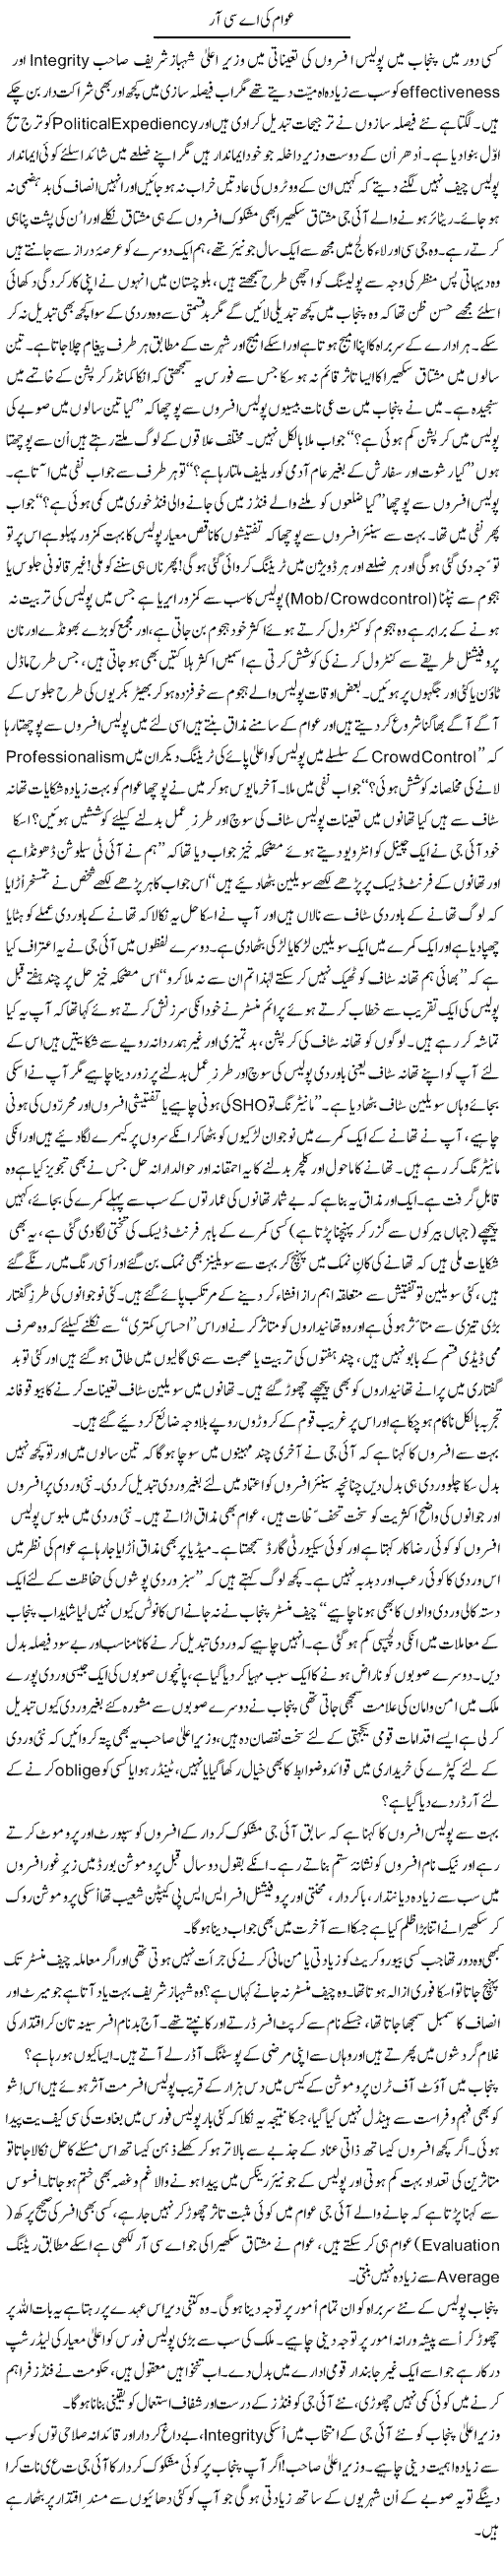 Awam Ki Acr | Zulfiqar Ahmed Cheema | Daily Urdu Columns